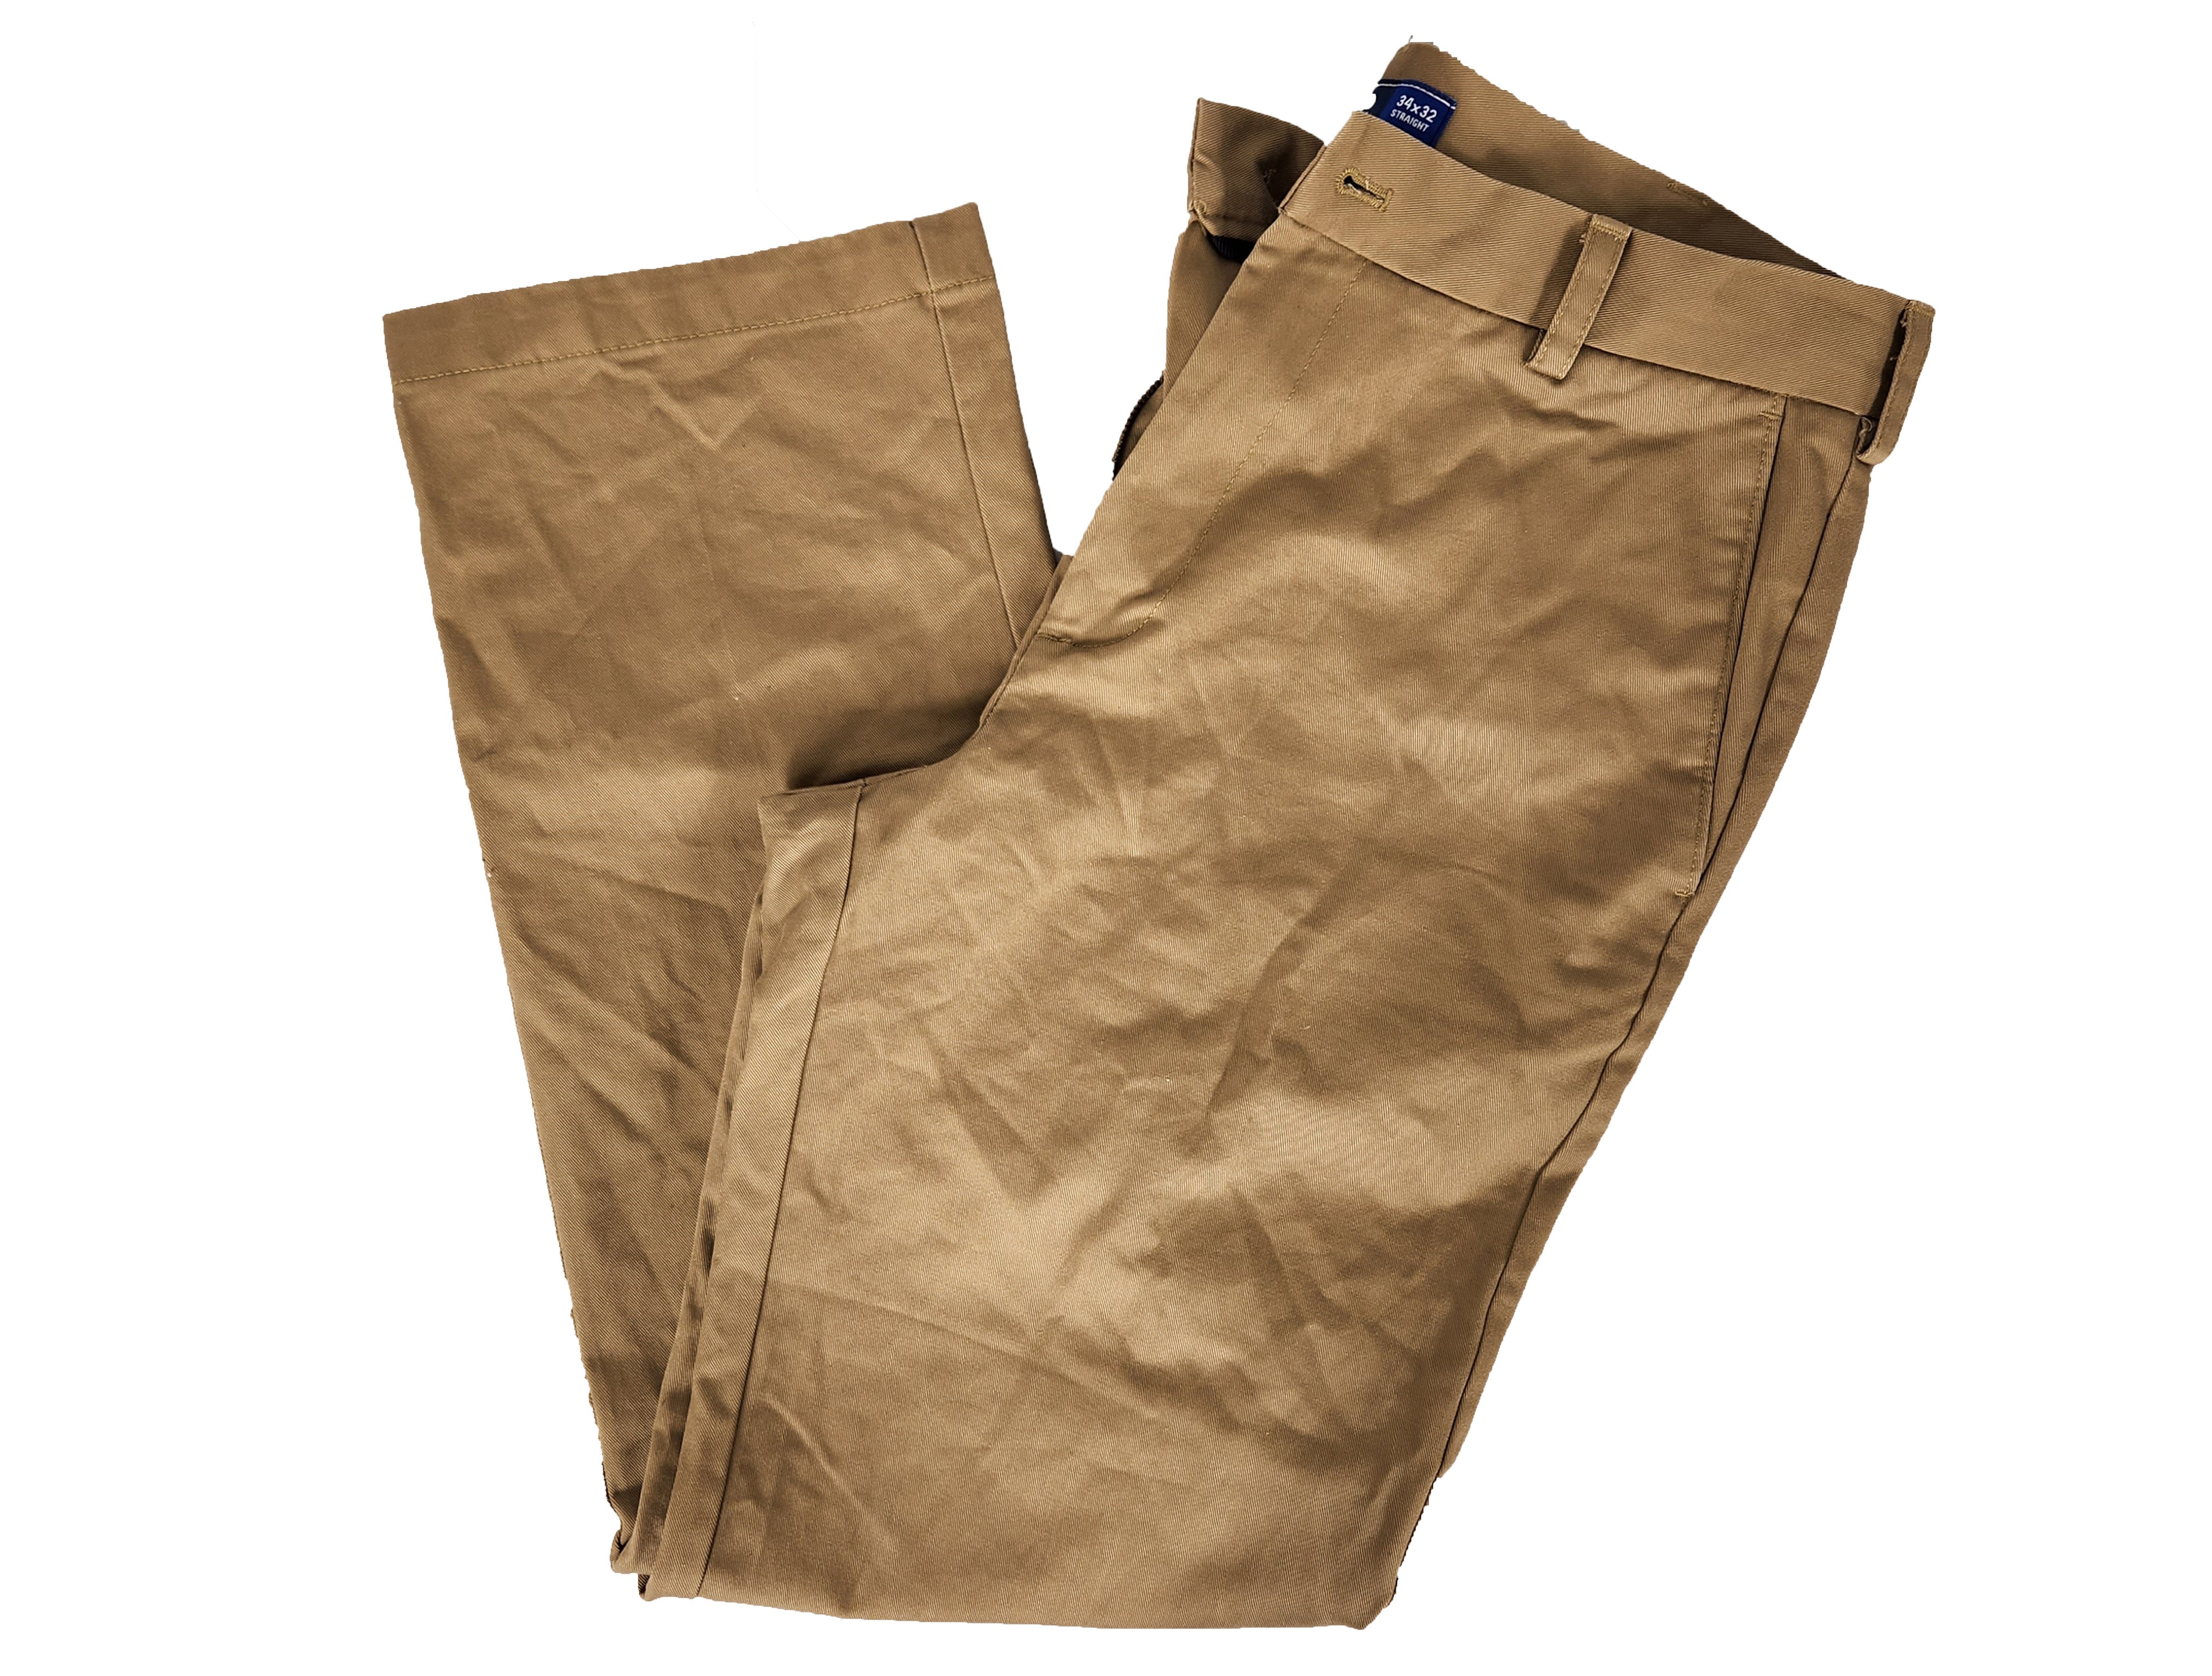 Izod Tan Straight Fit Cotton Chino Pants Men's Size 34x32